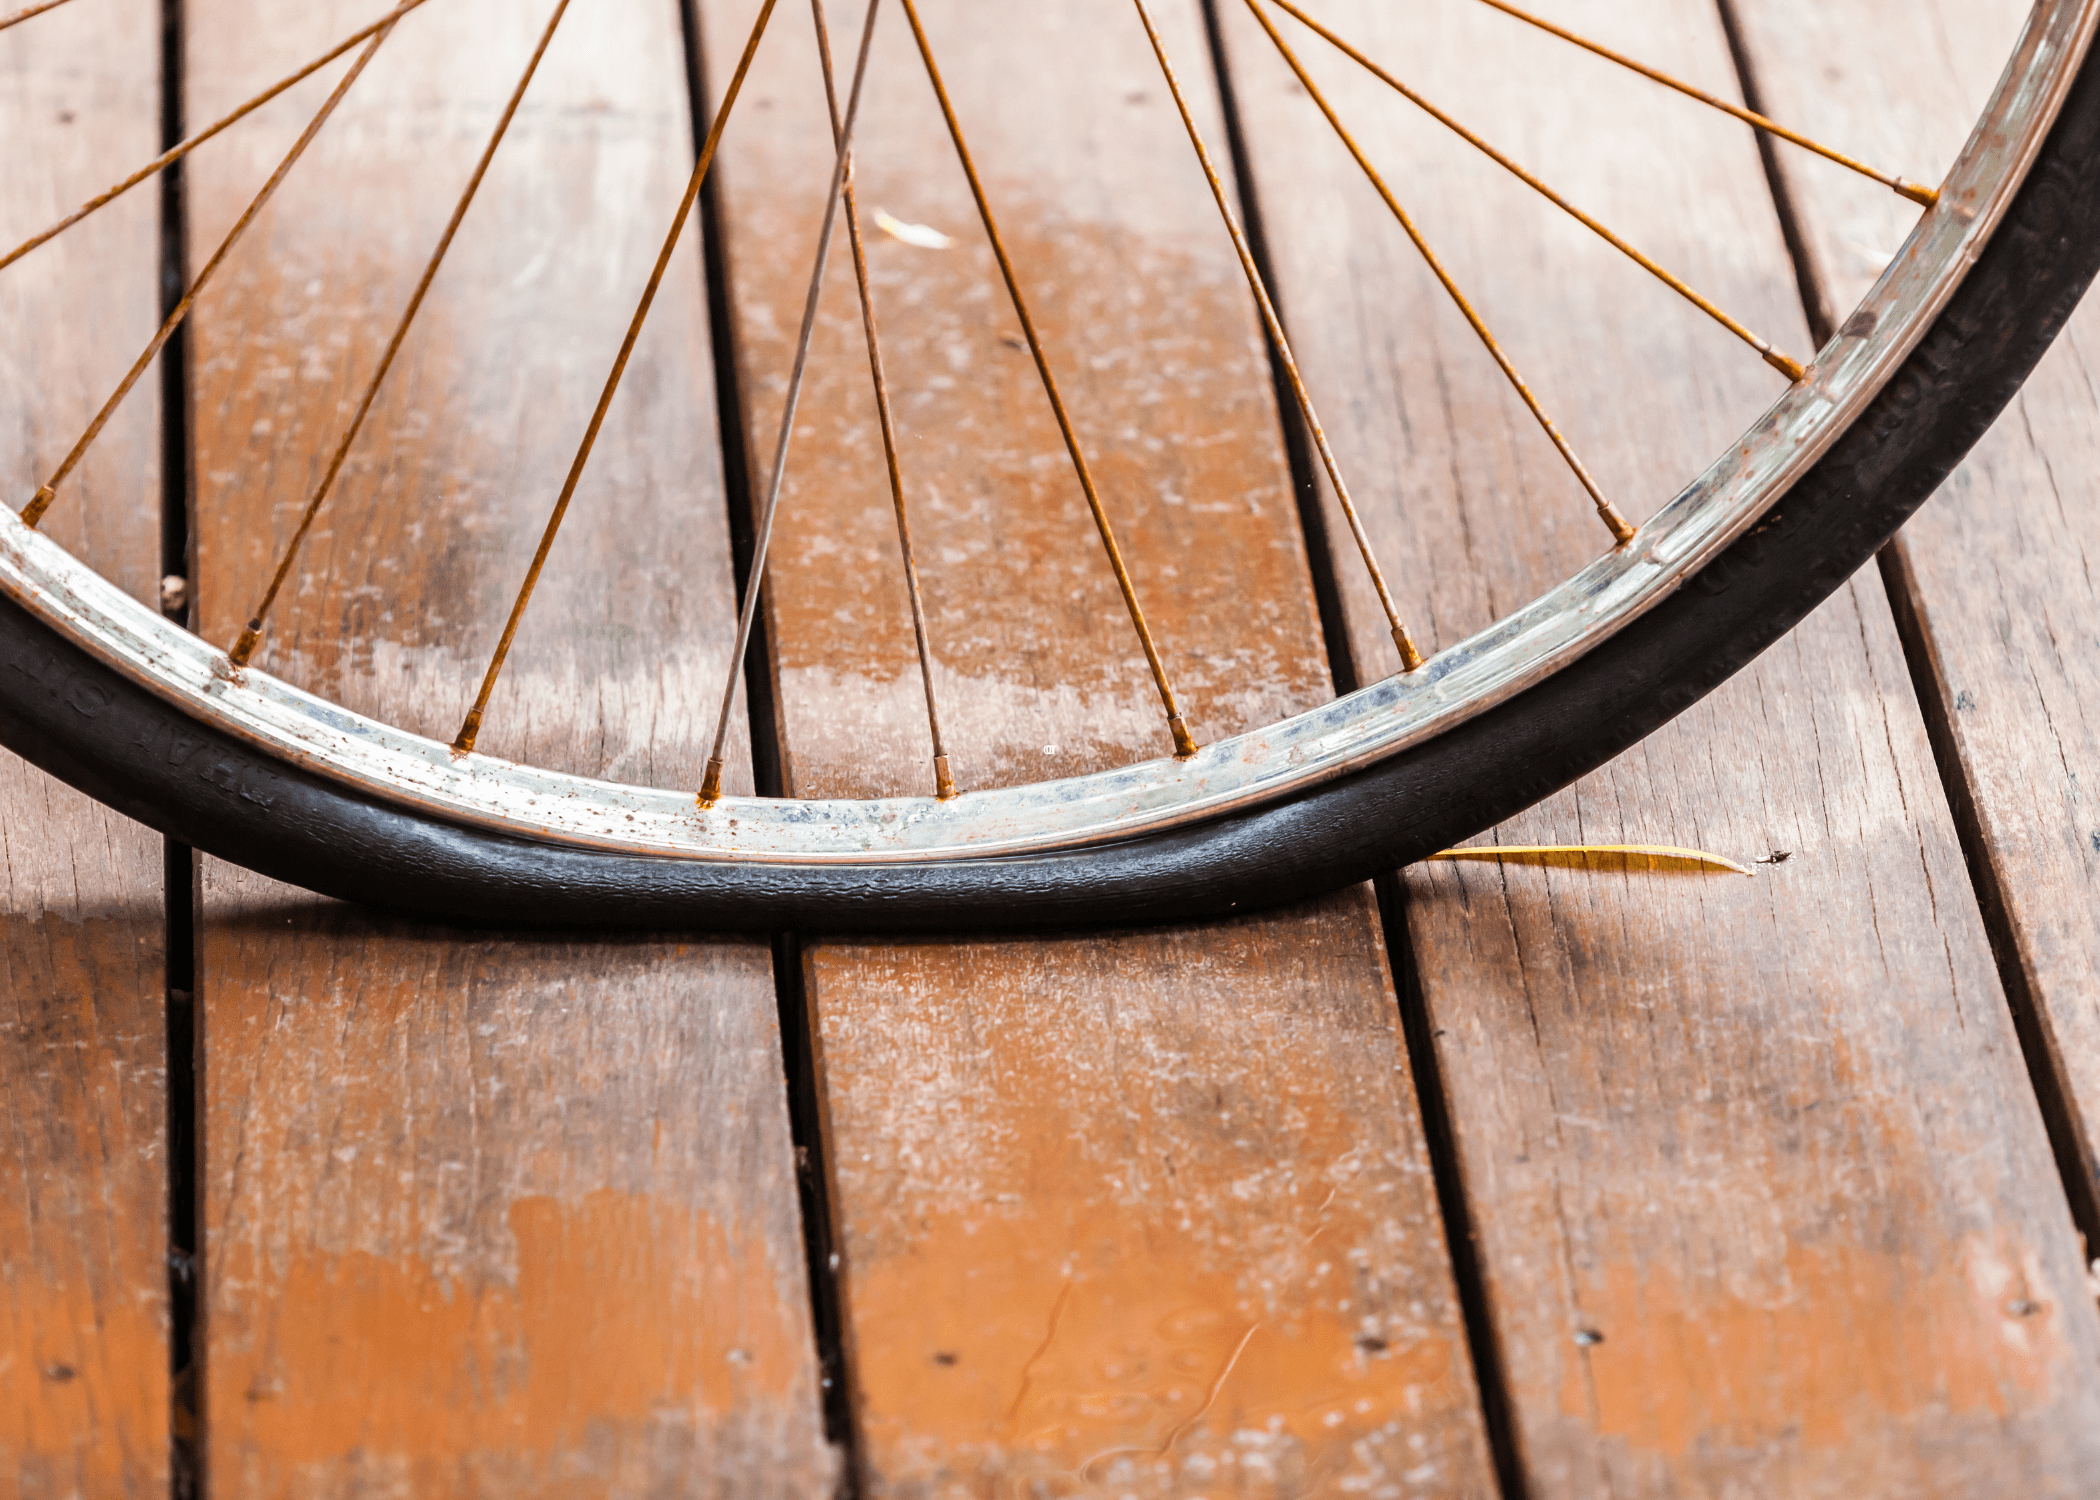 close up of flat bike tire